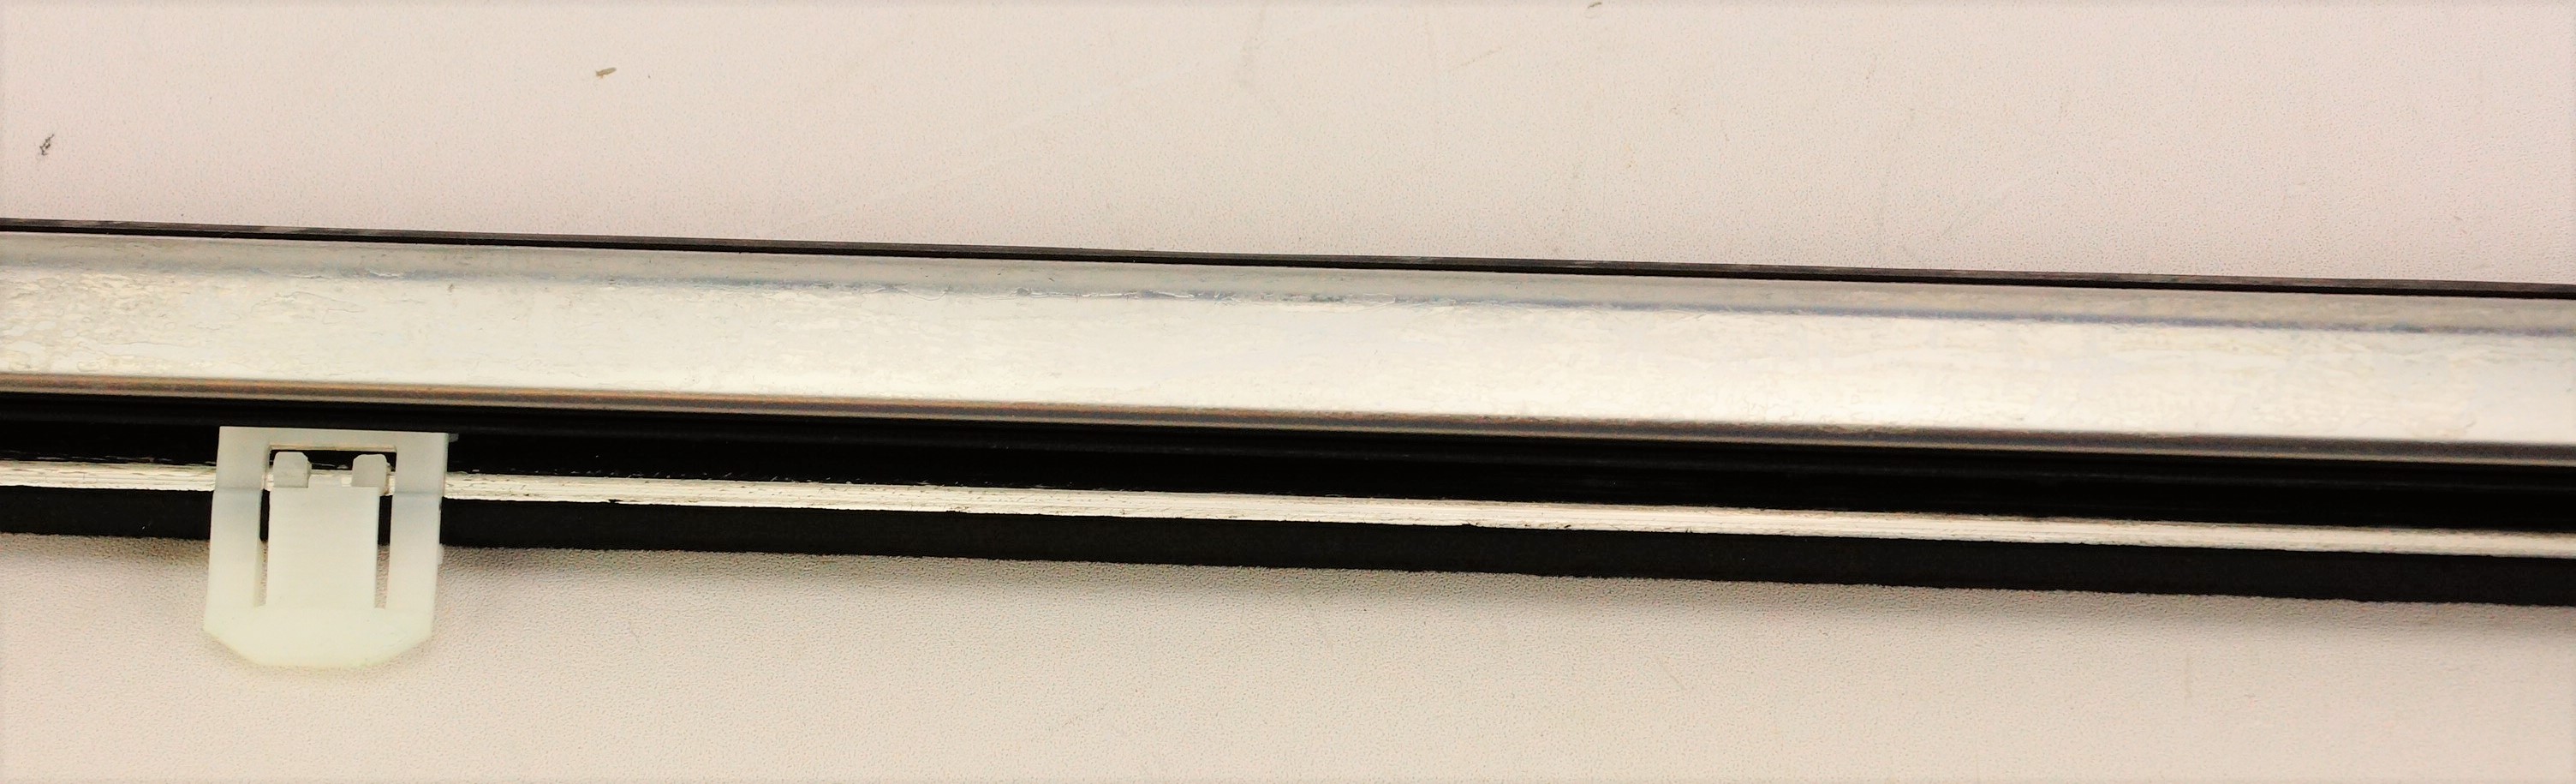 Genuine OEM 72950-S84-A01 Honda 2000 Accord Left Rear Door Moulding Chrome - image 3